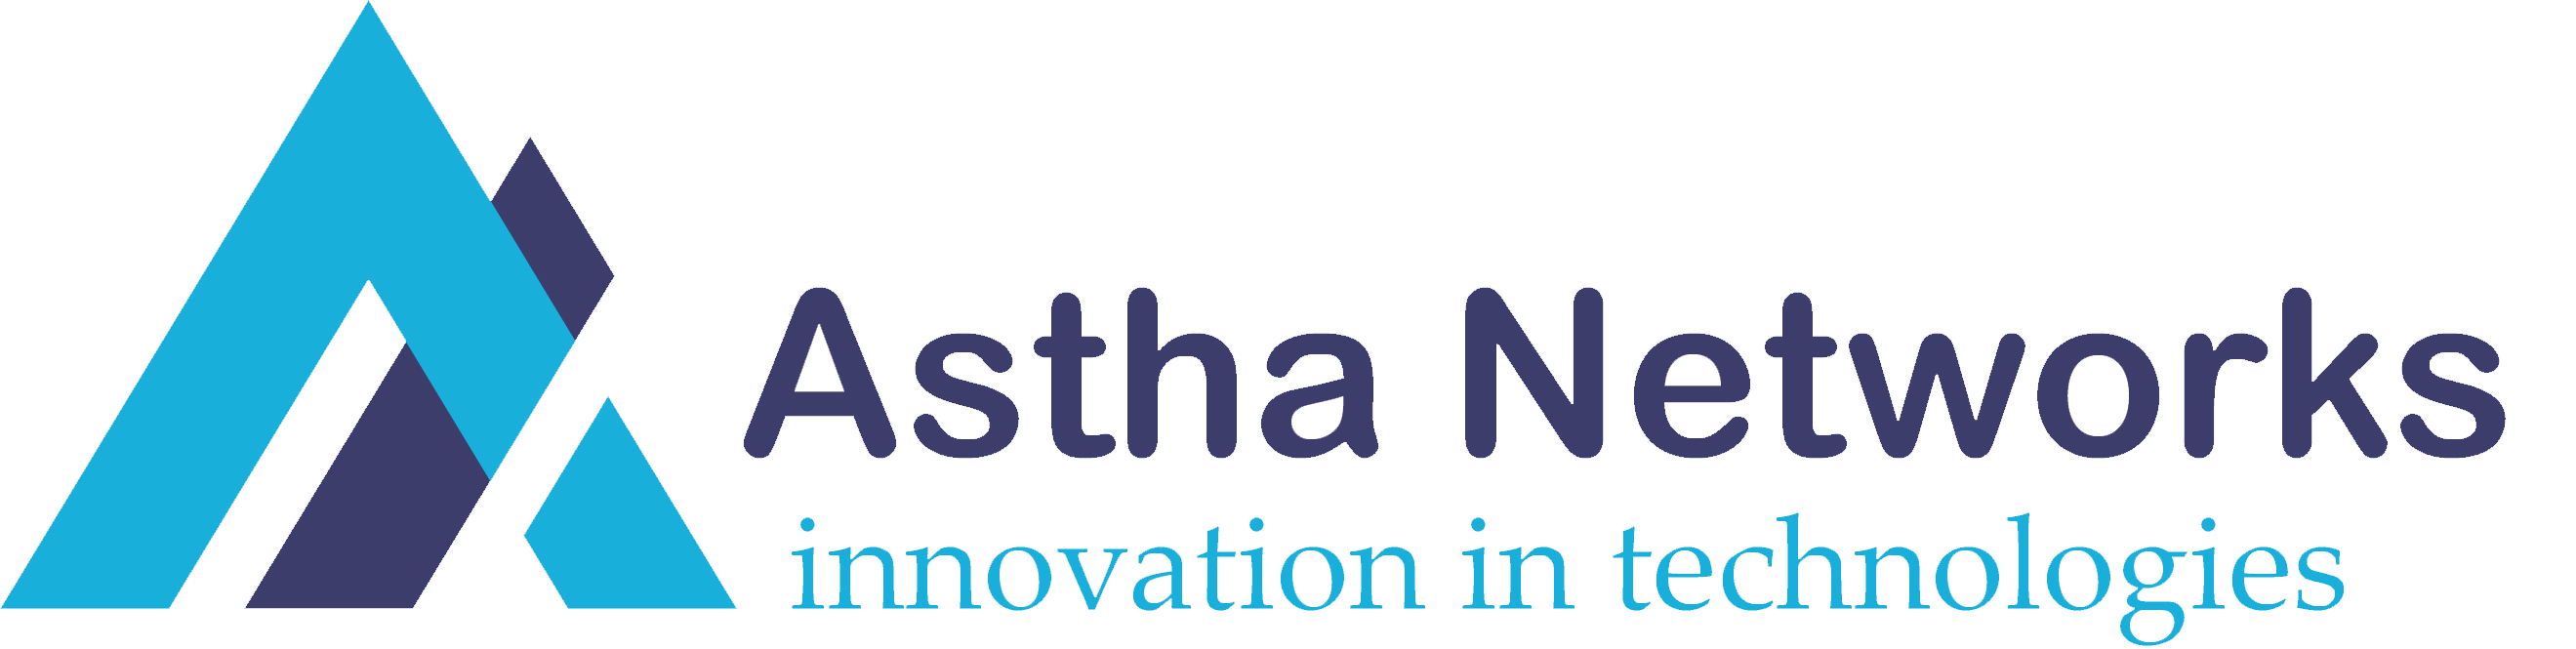 Astha Networks